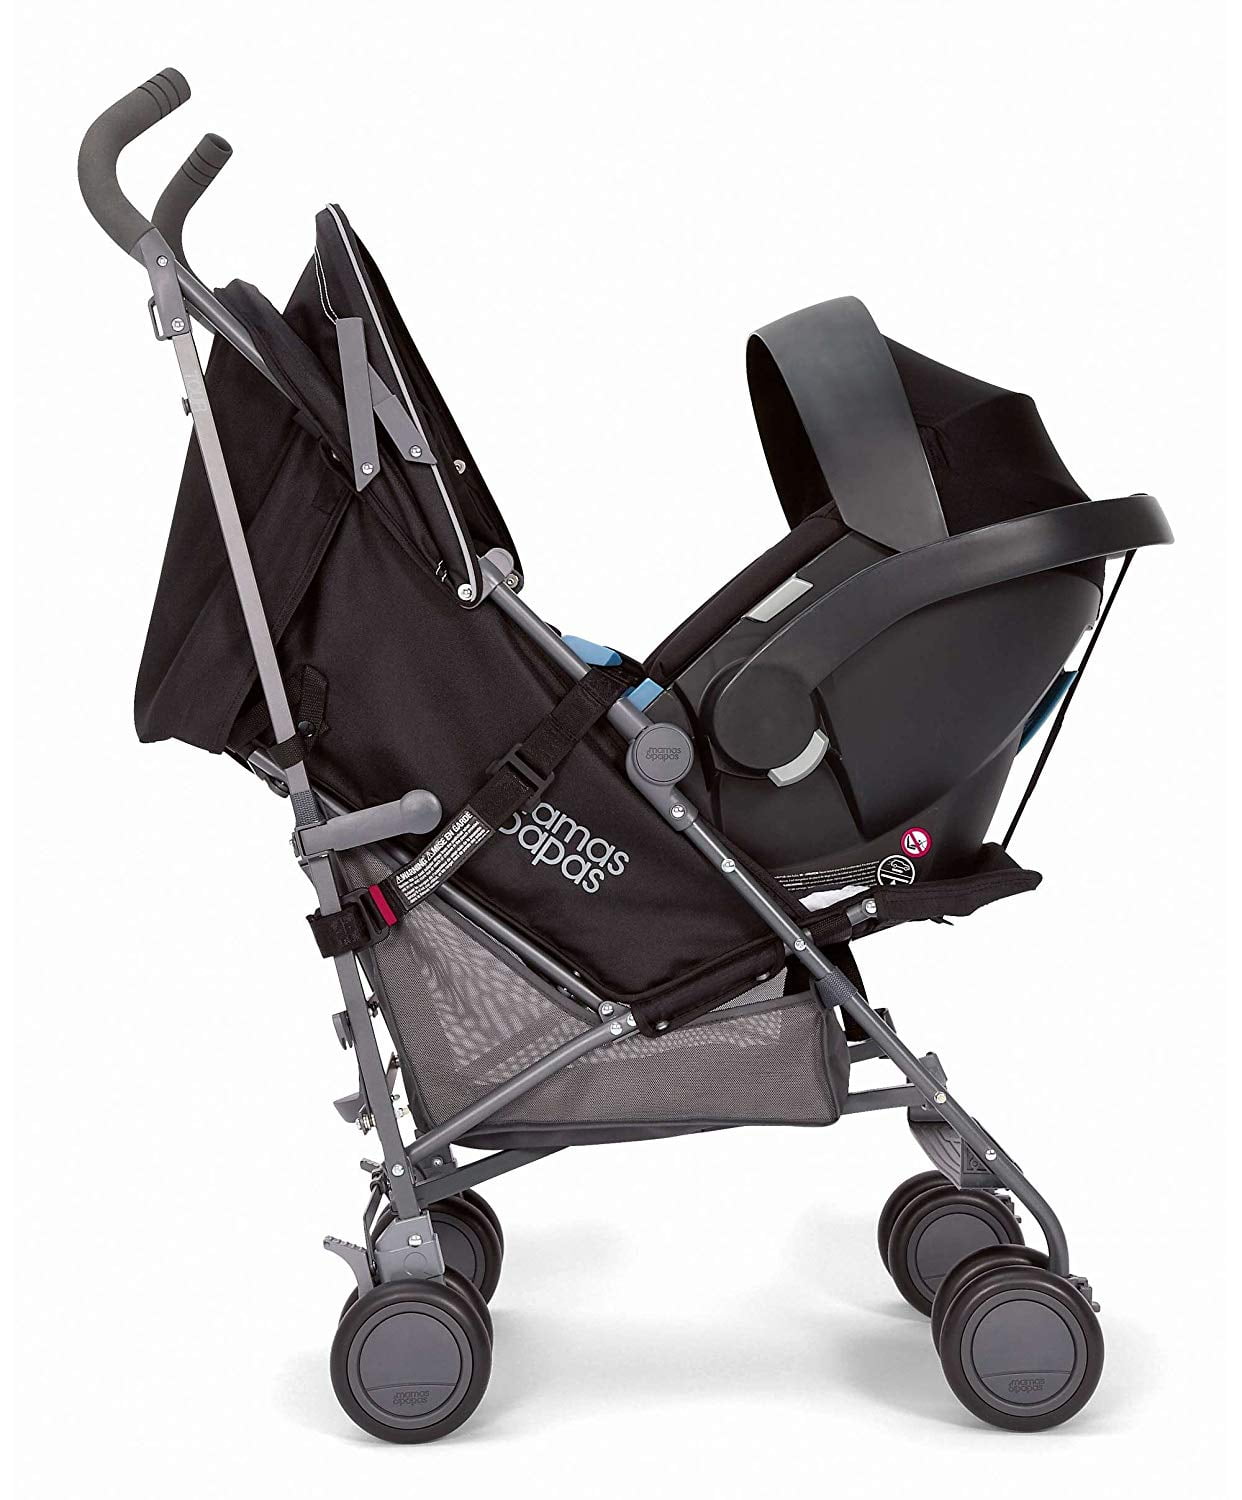 mamas and papas stroller car seat adapter